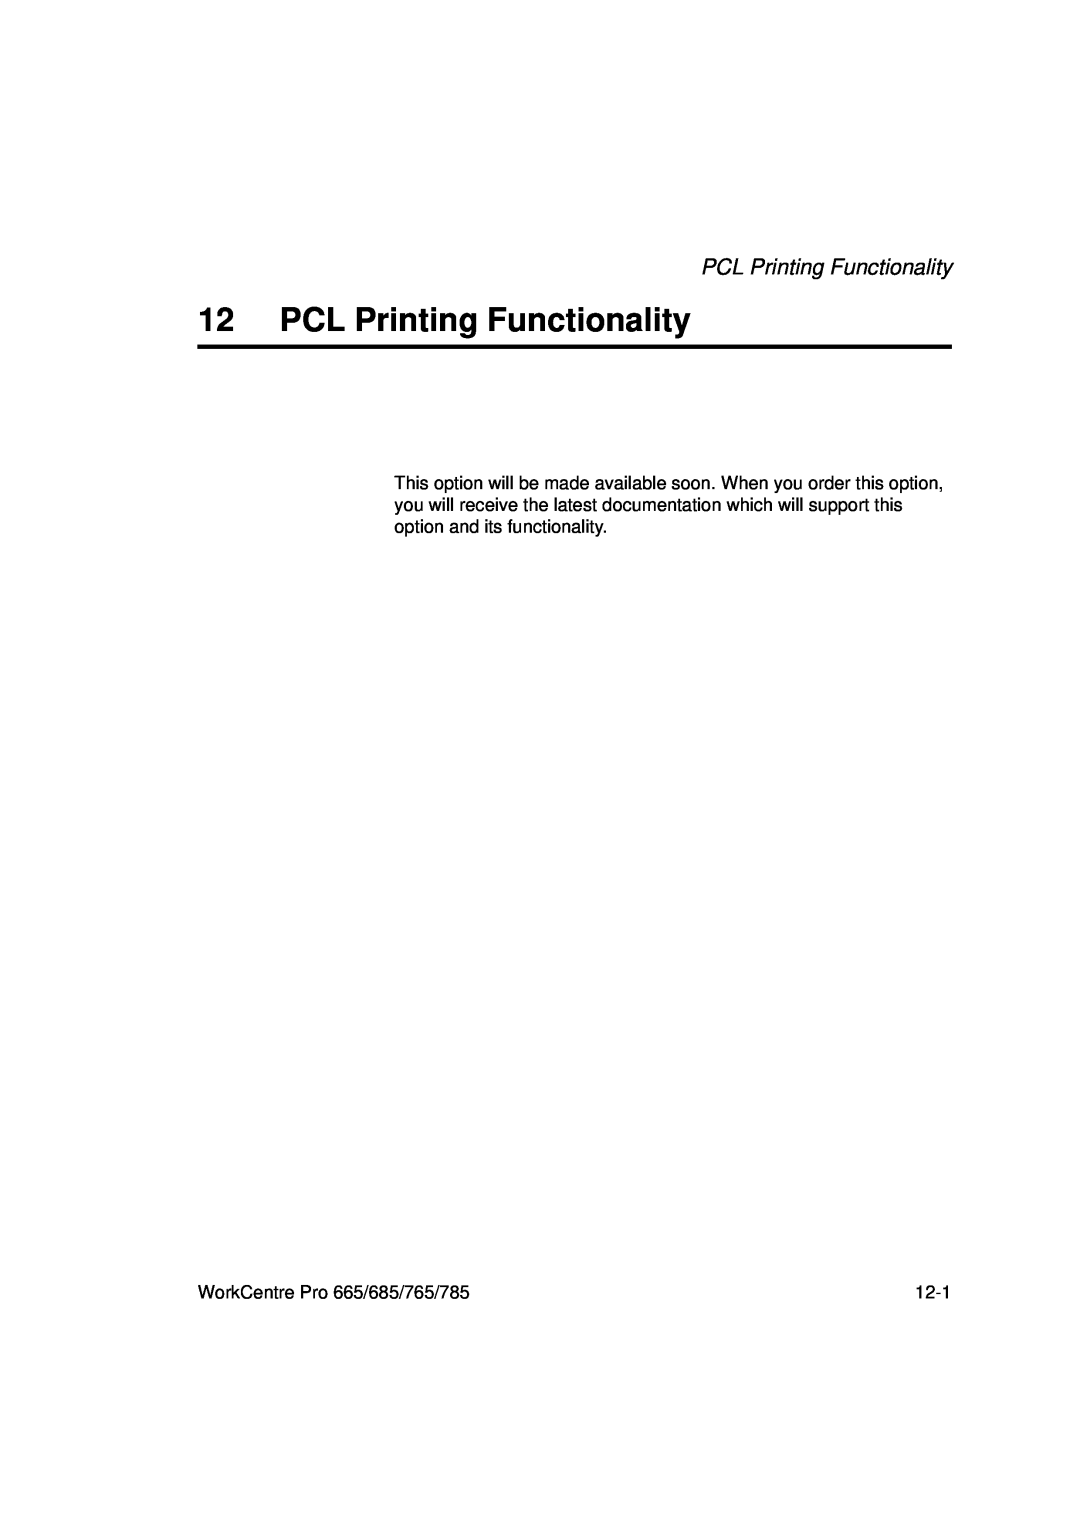 Xerox 785, 765, 665, 685 manual PCL Printing Functionality 